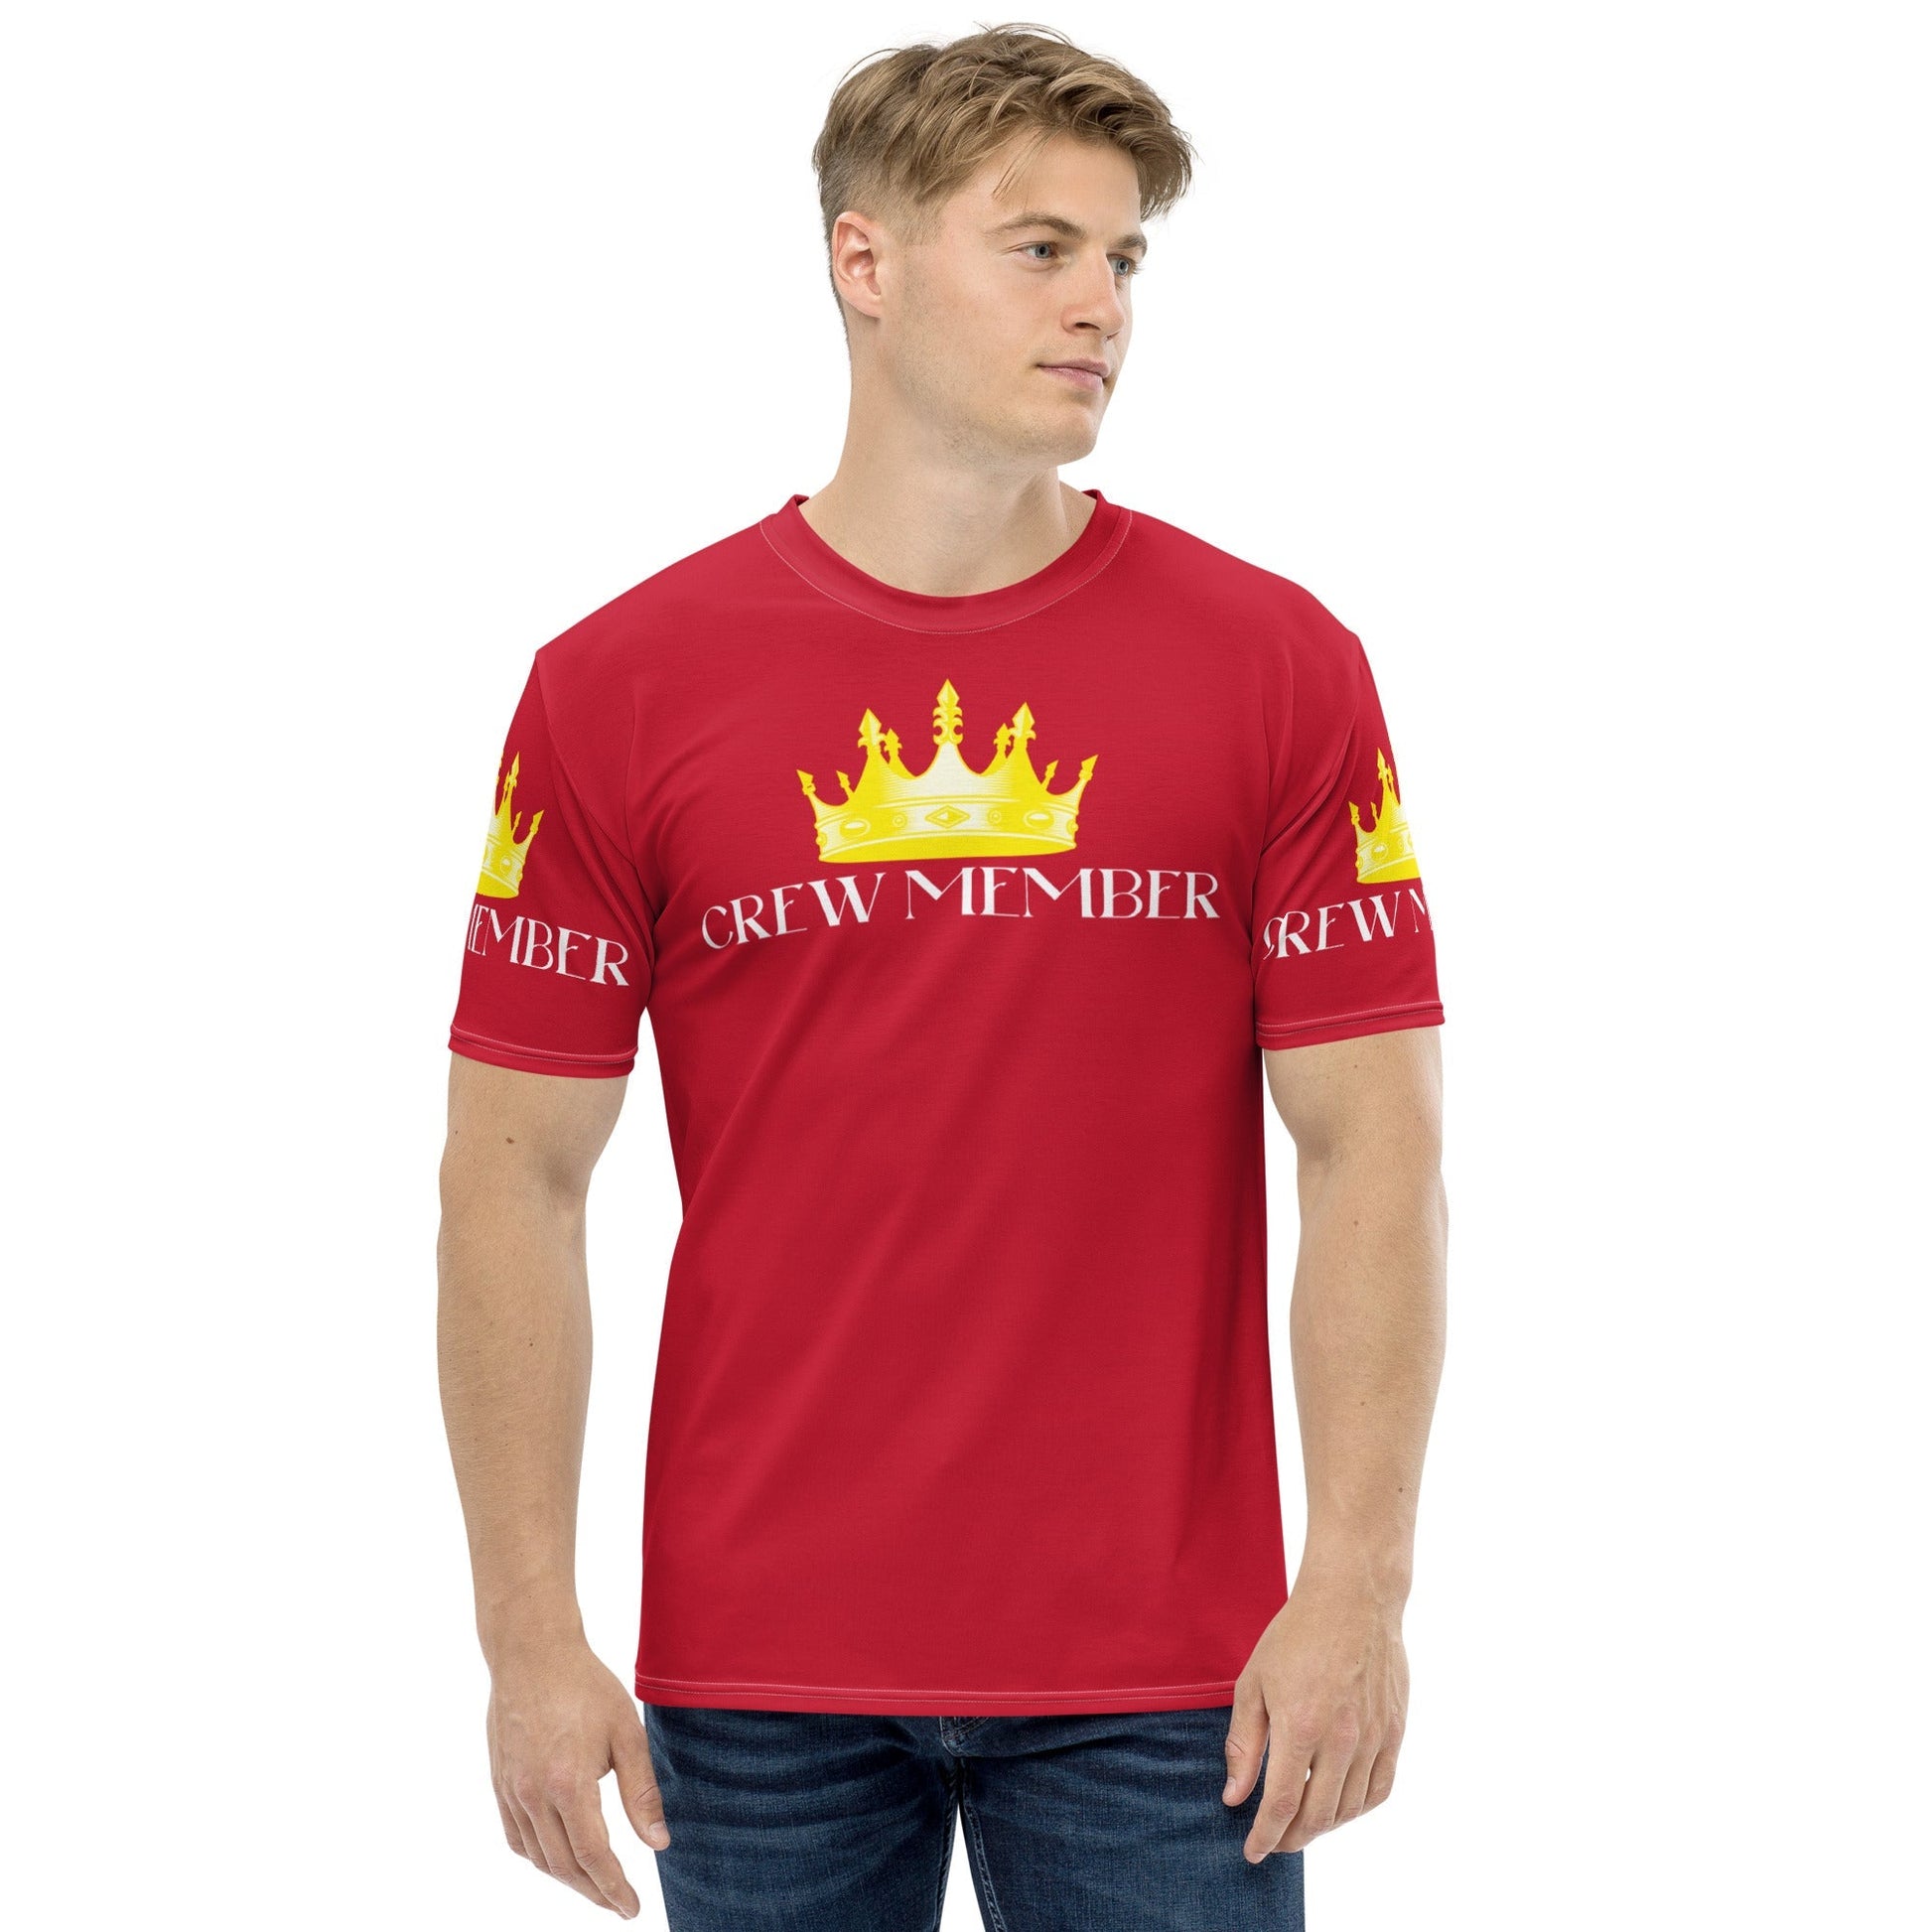 KING CREW Member Streetwear T-Shirt Herren - RED - BLOODY-STREETS.DE Streetwear Herren und Damen Hoodies, T-Shirts, Pullis